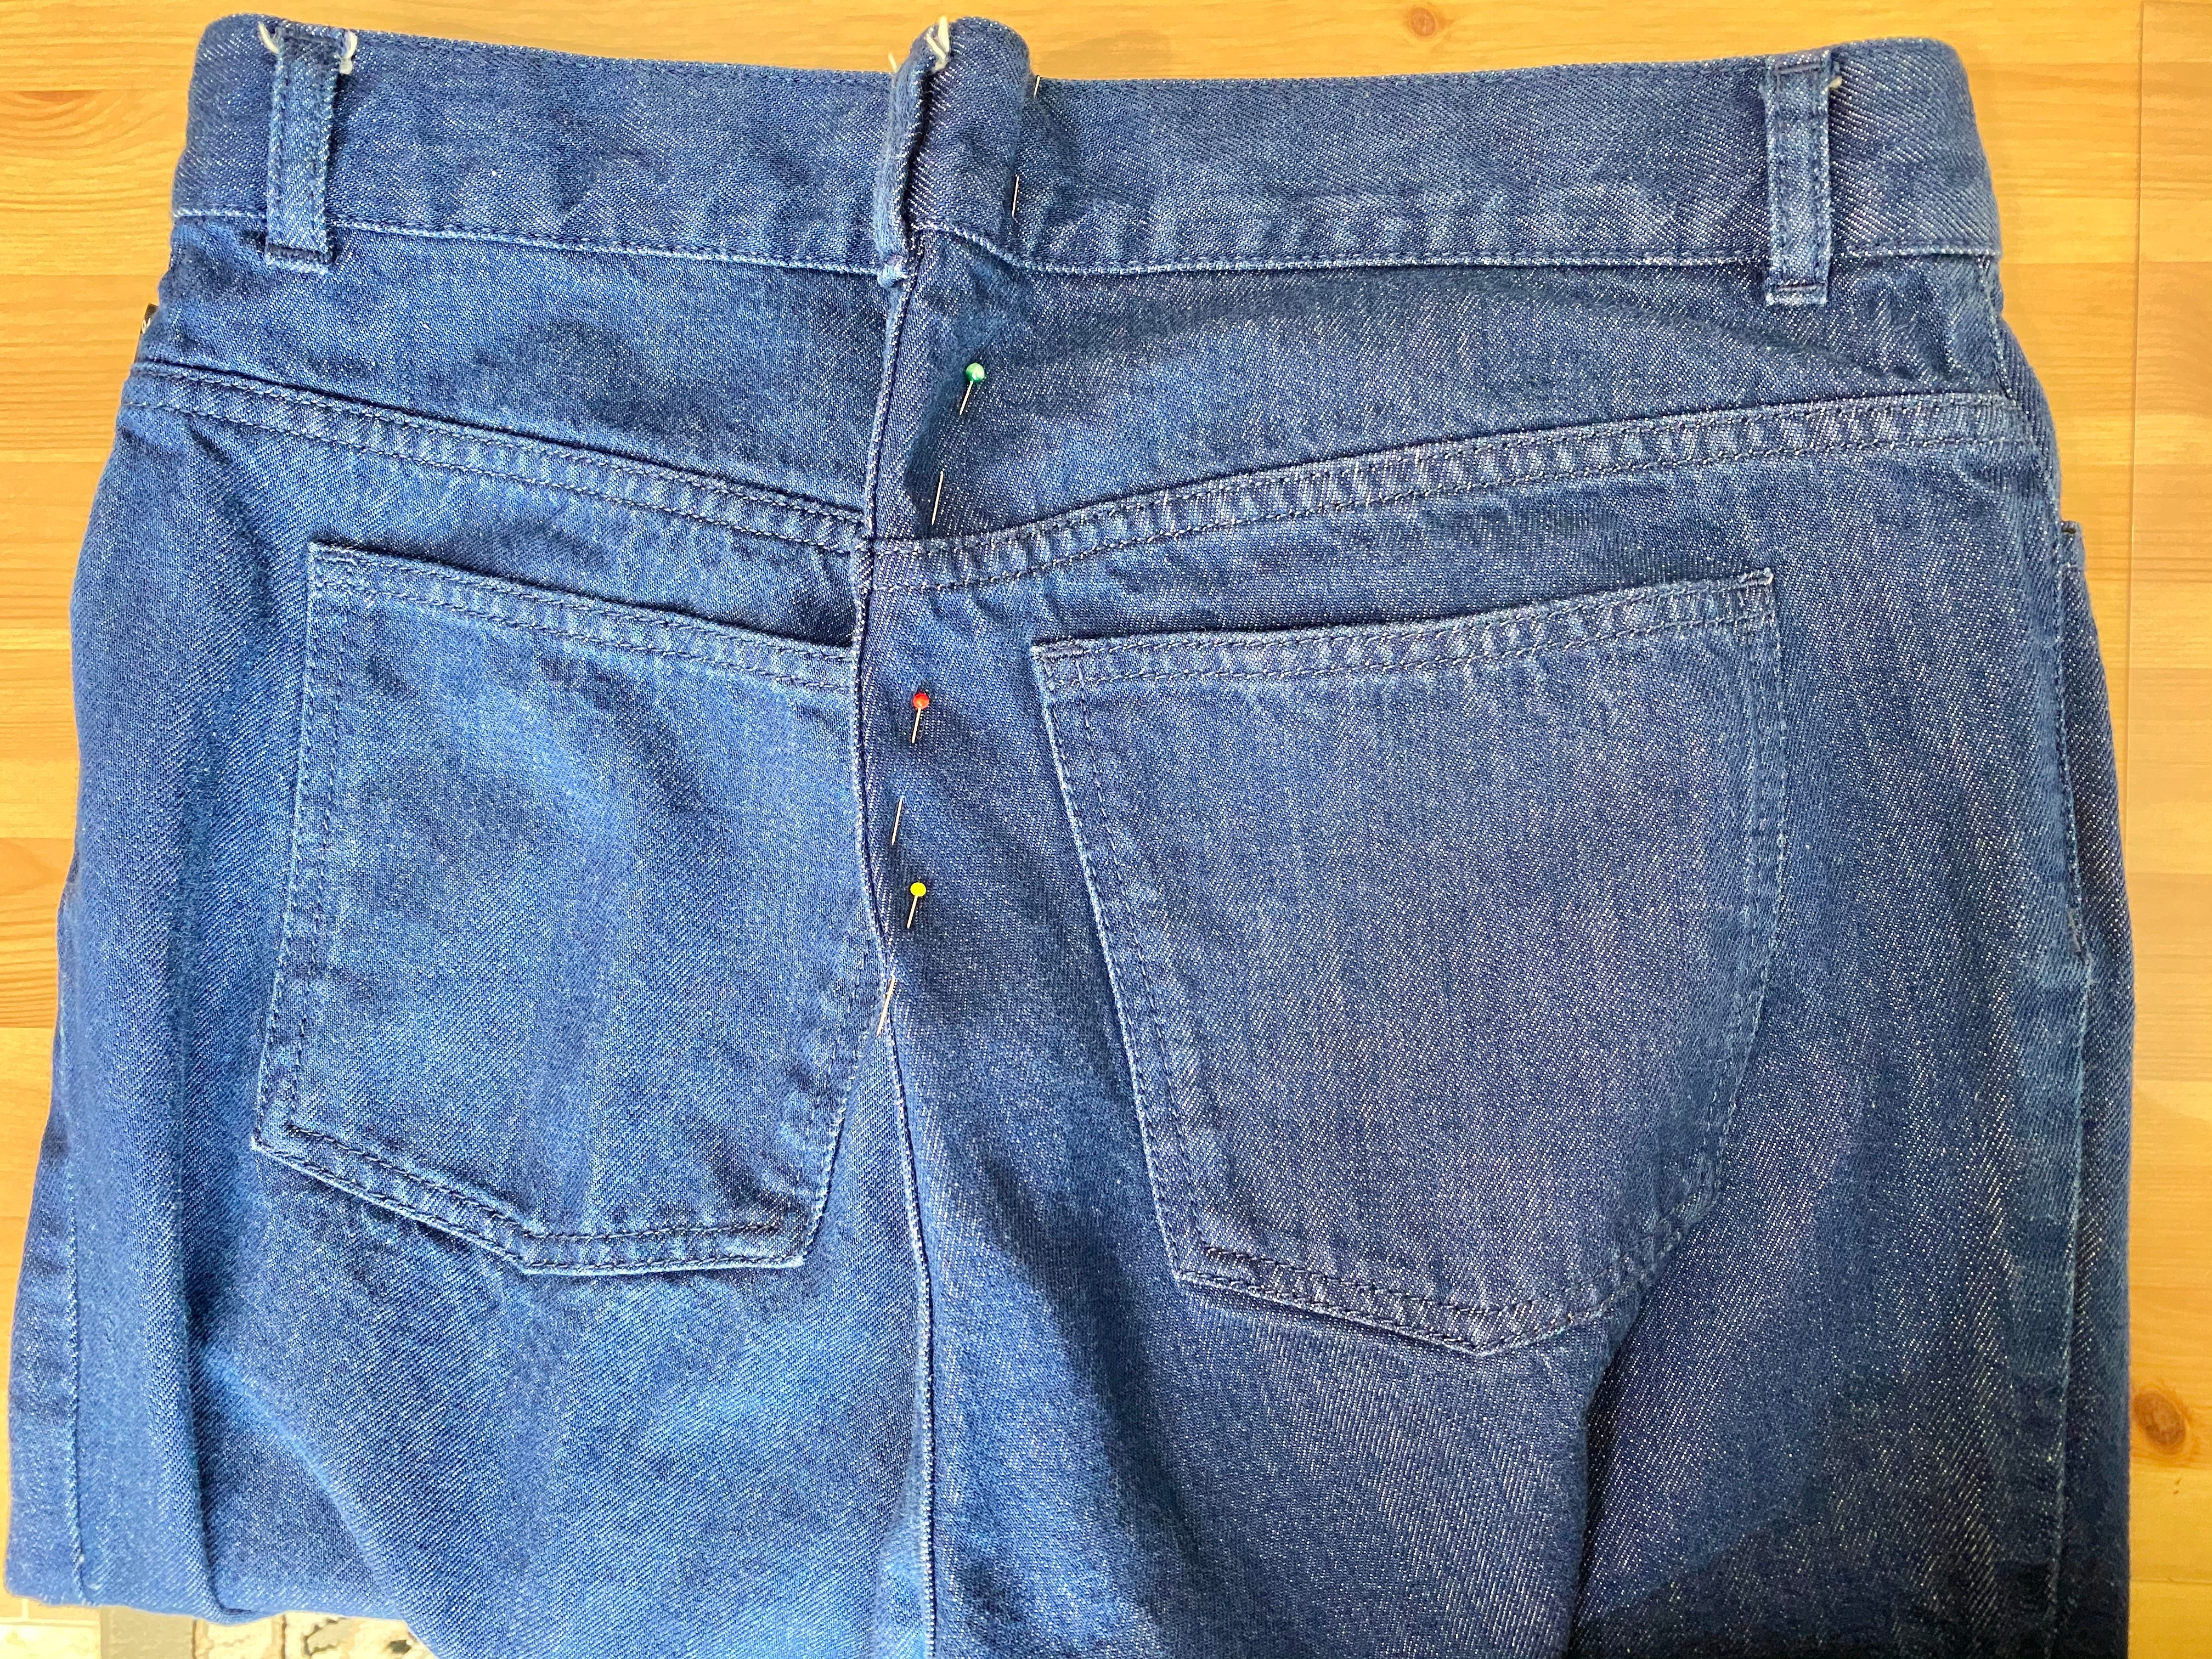 jeans waist alteration